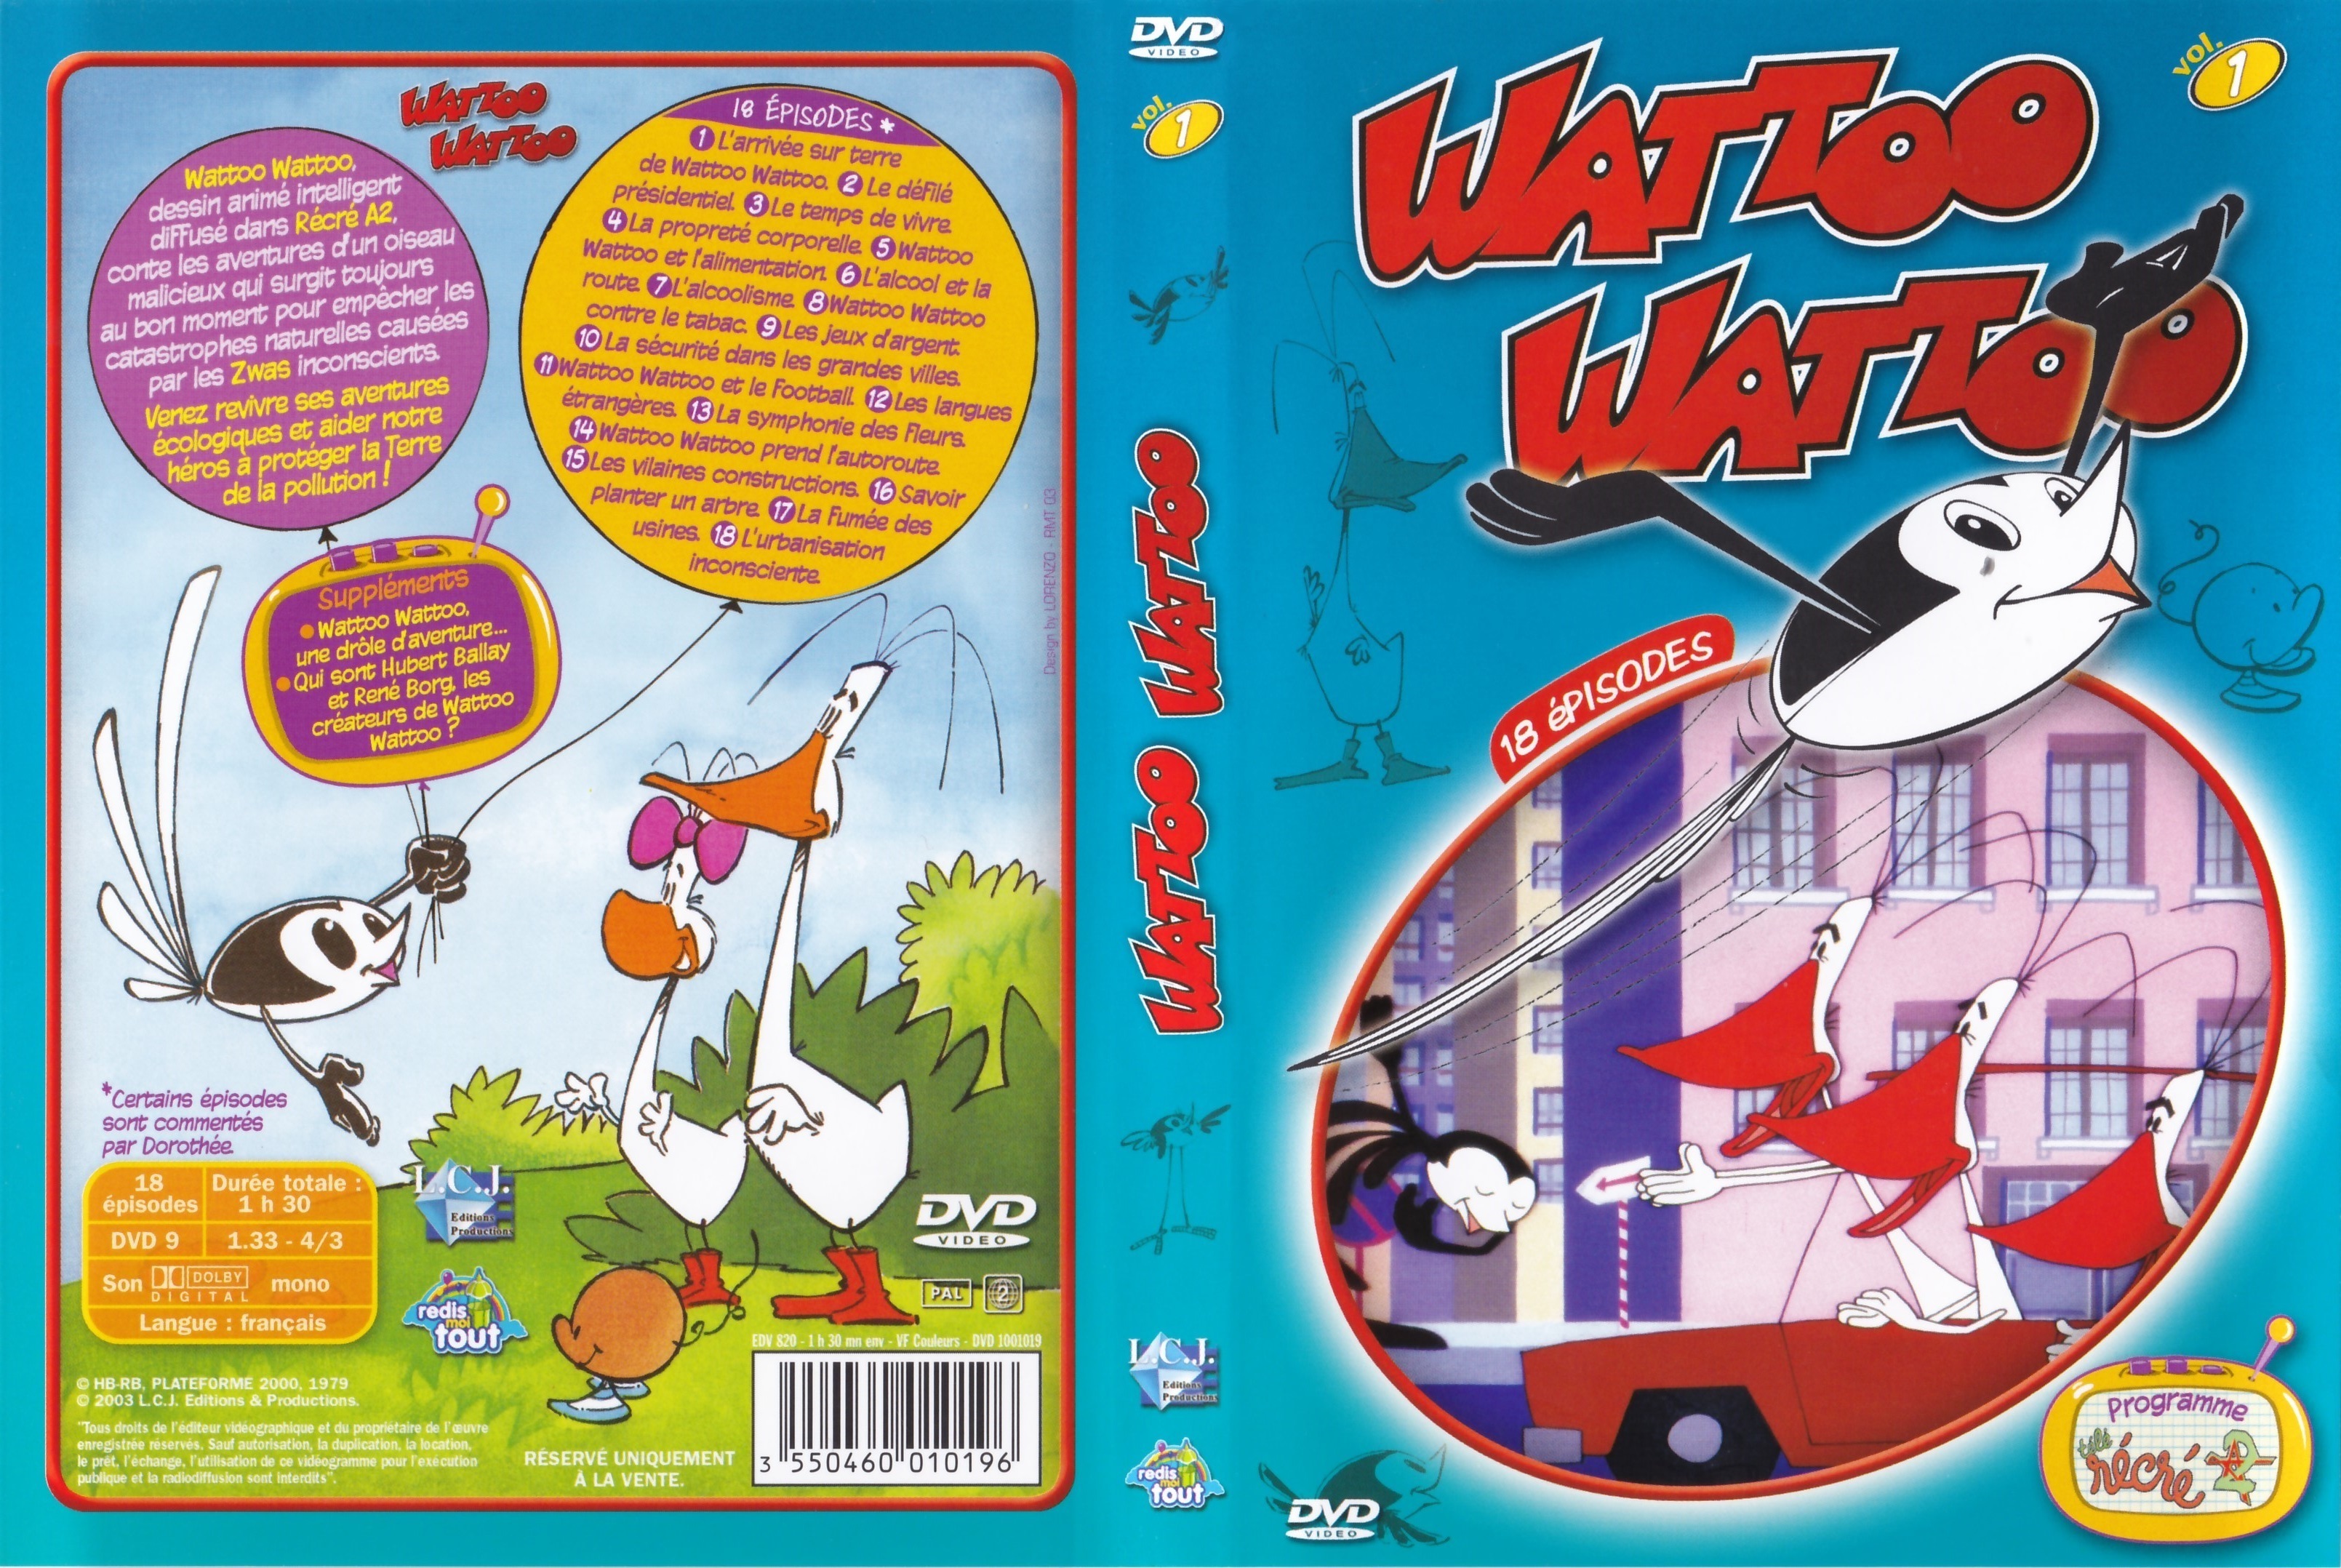 Jaquette DVD Wattoo Wattoo vol 1